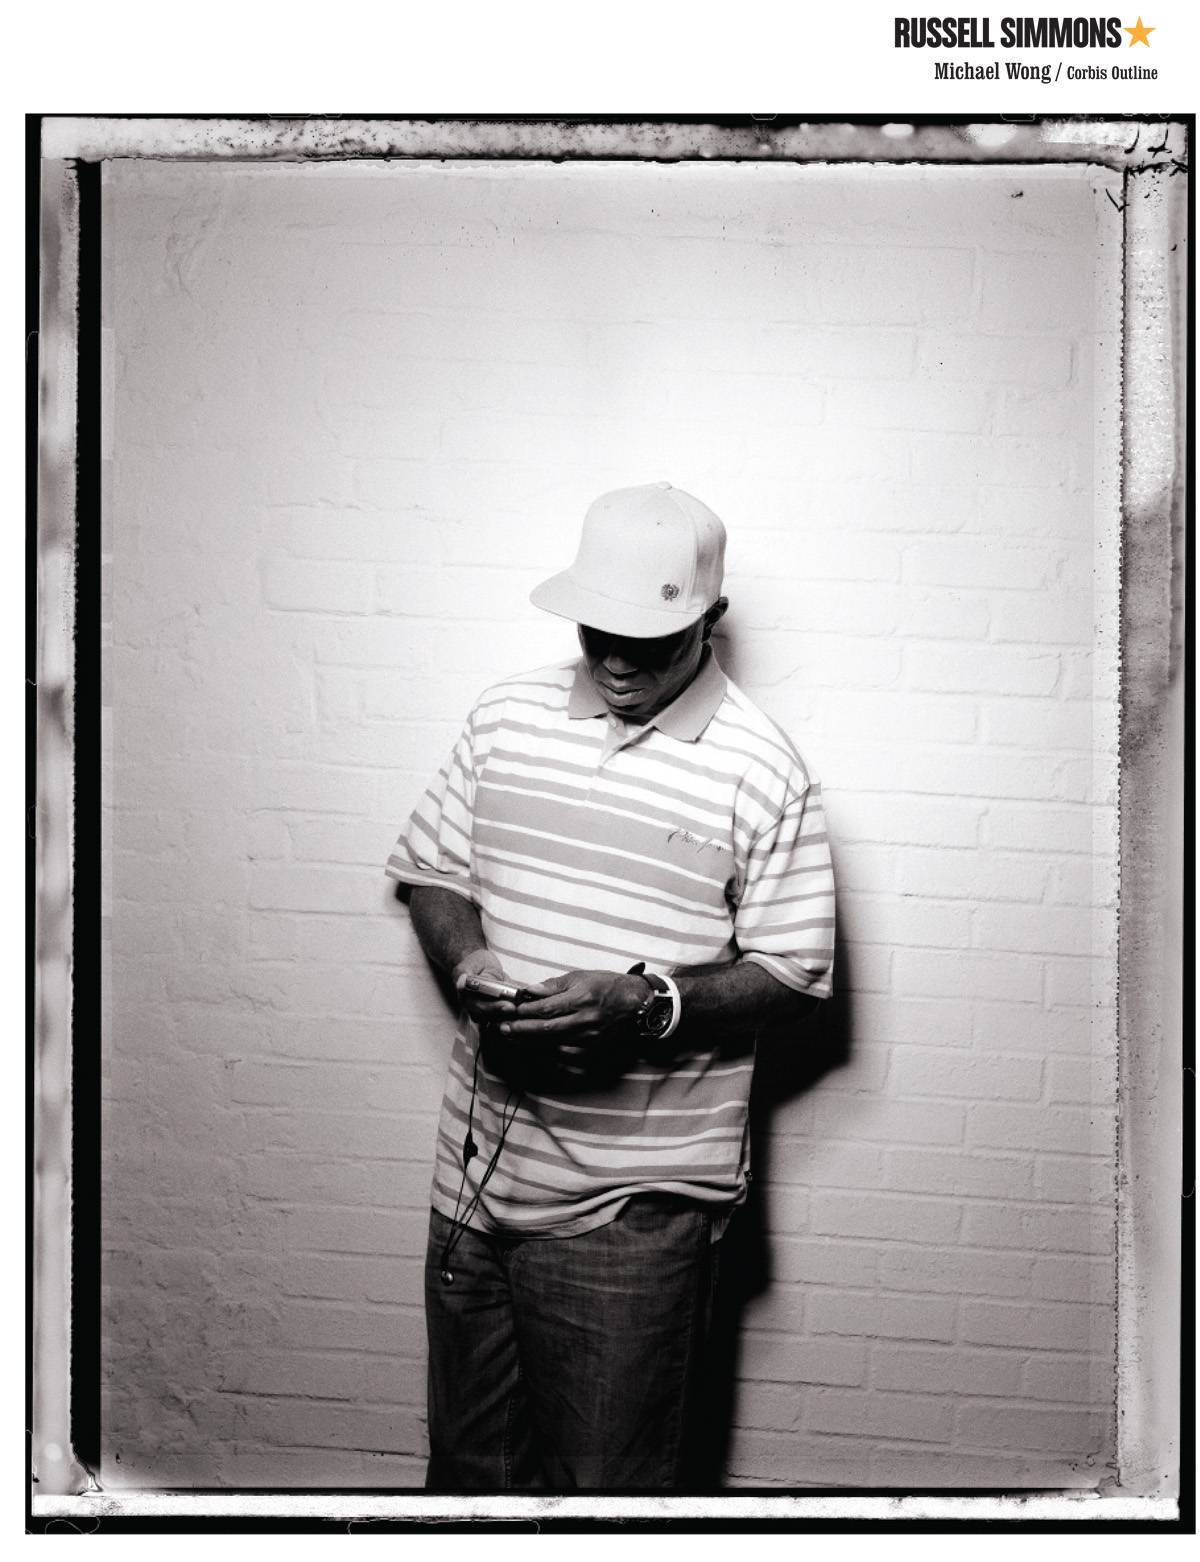 Photographic print of Biggie Smalls, Tupac, Redman at Club , NYC